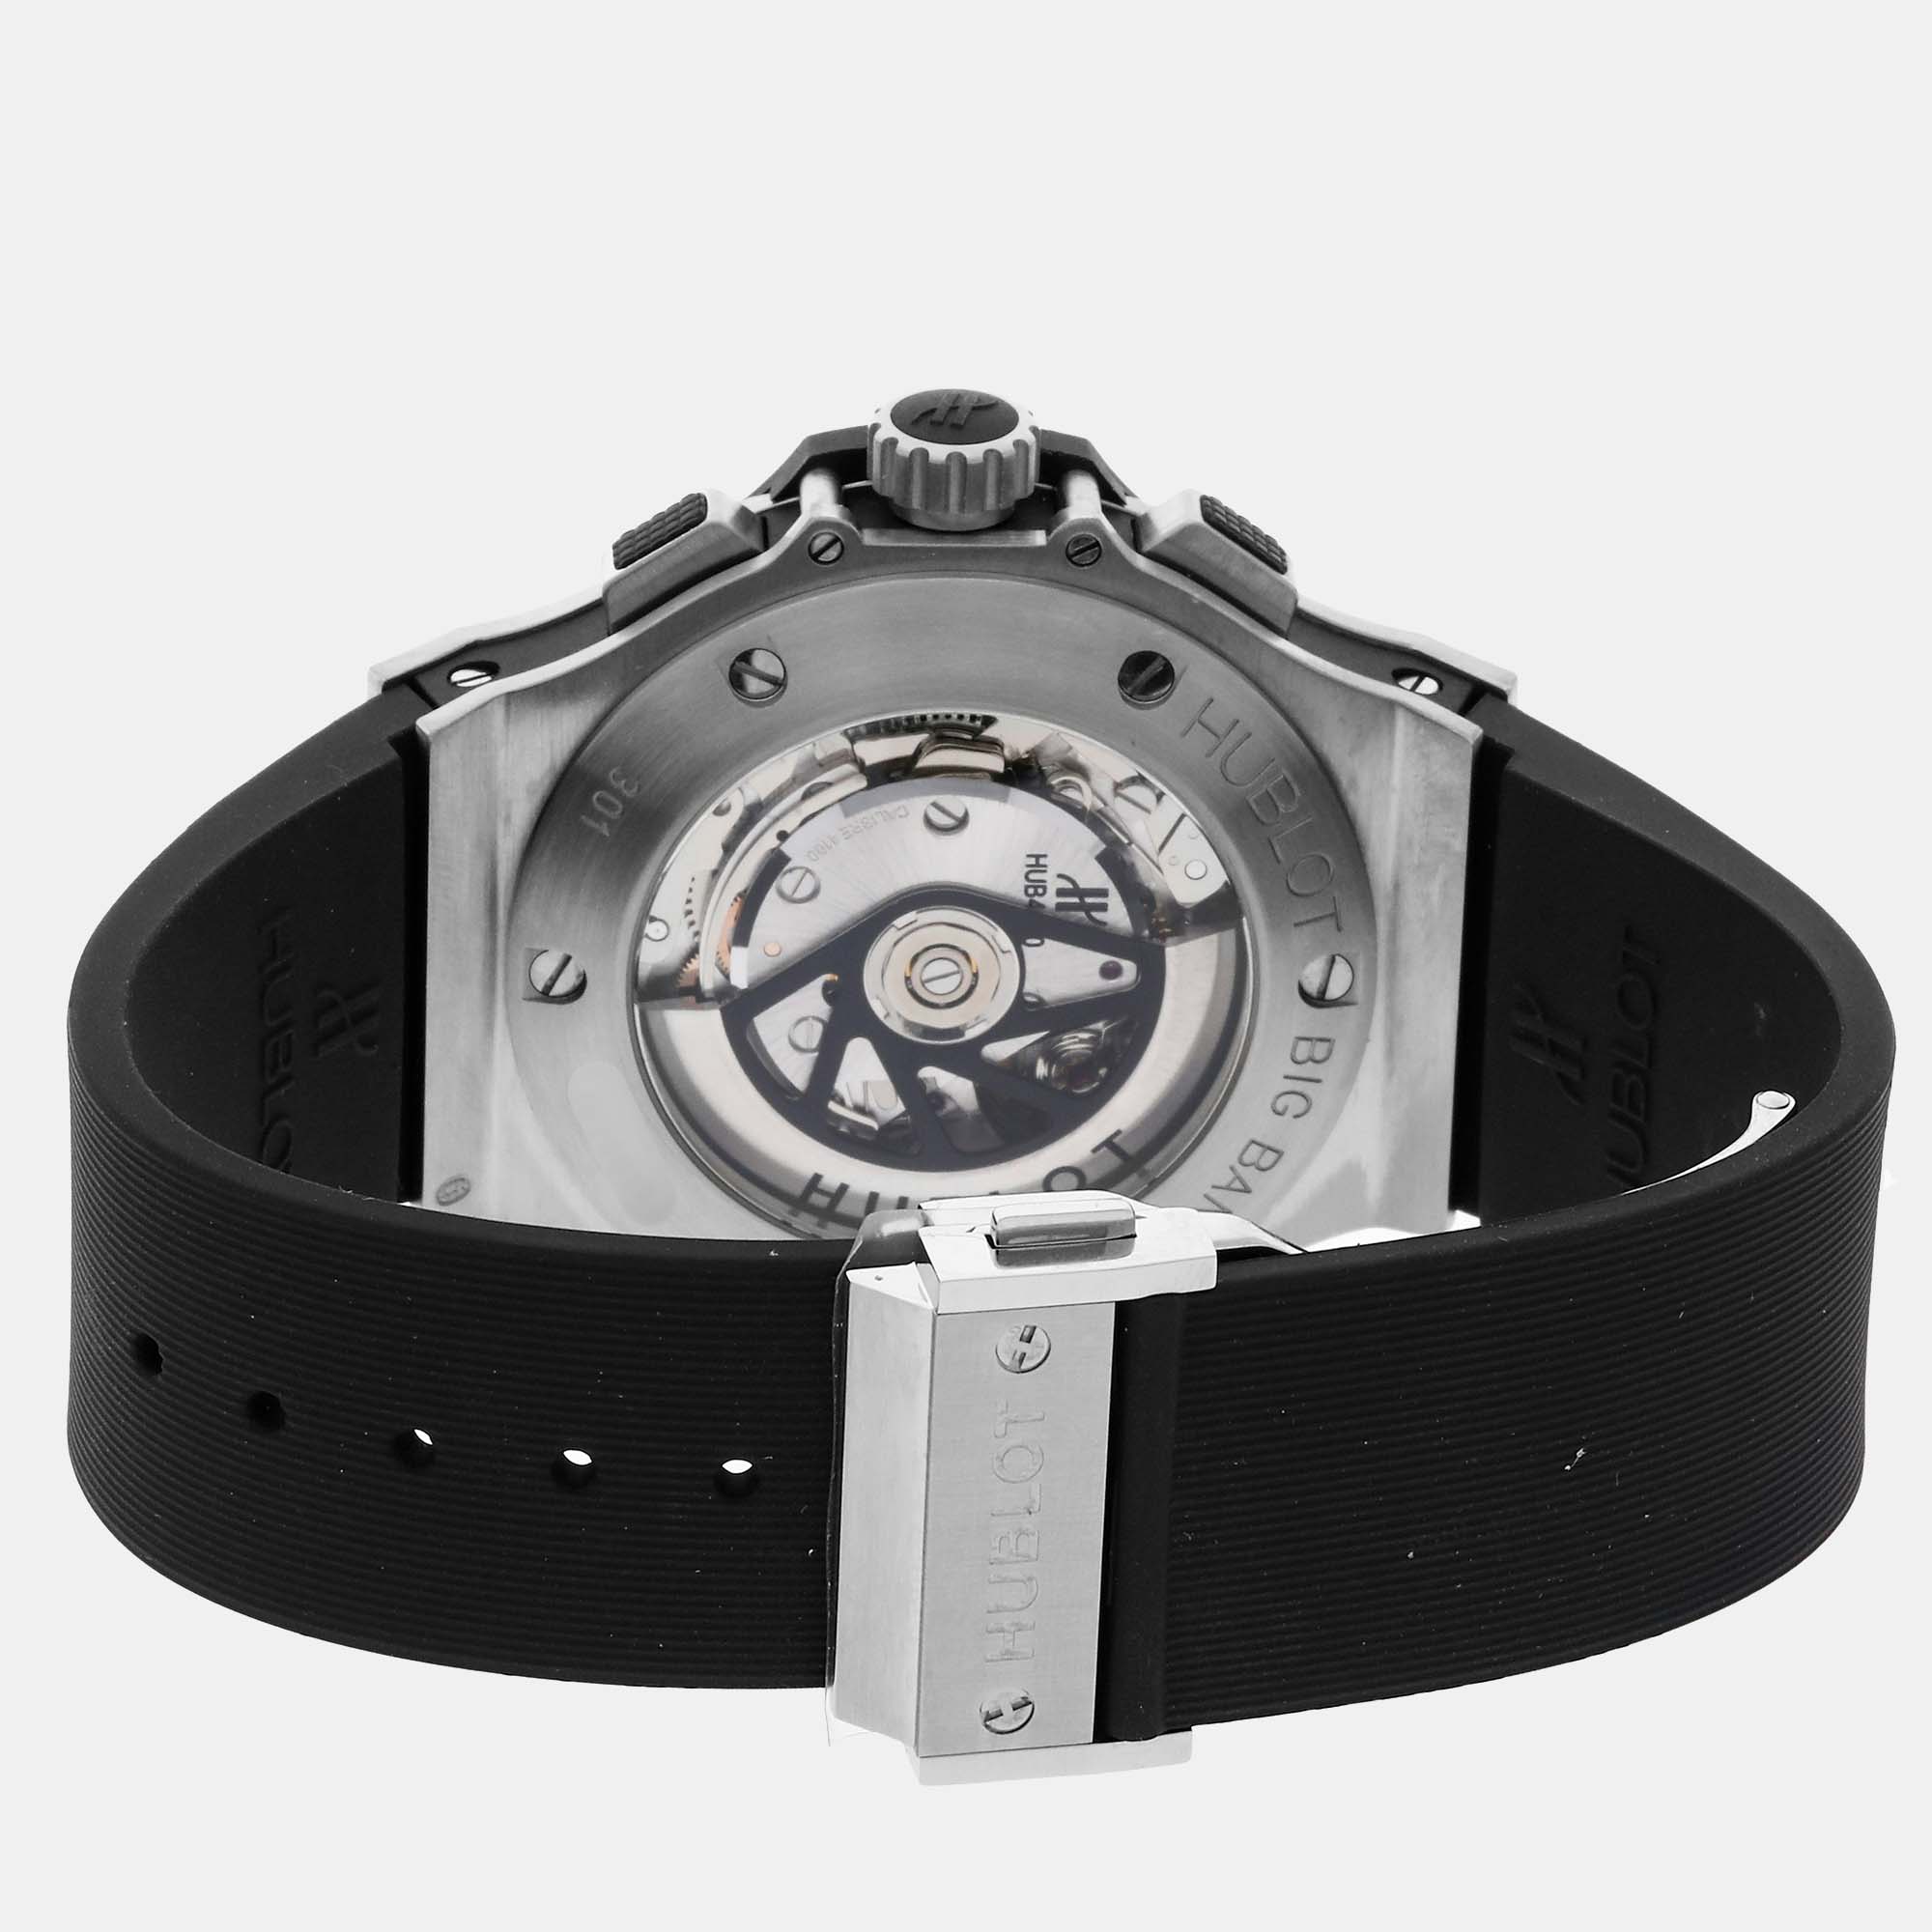 Hublot Black Stainless Steel Big Bang 301.SX.1170.RX.1104 Automatic Men's Wristwatch 44 Mm